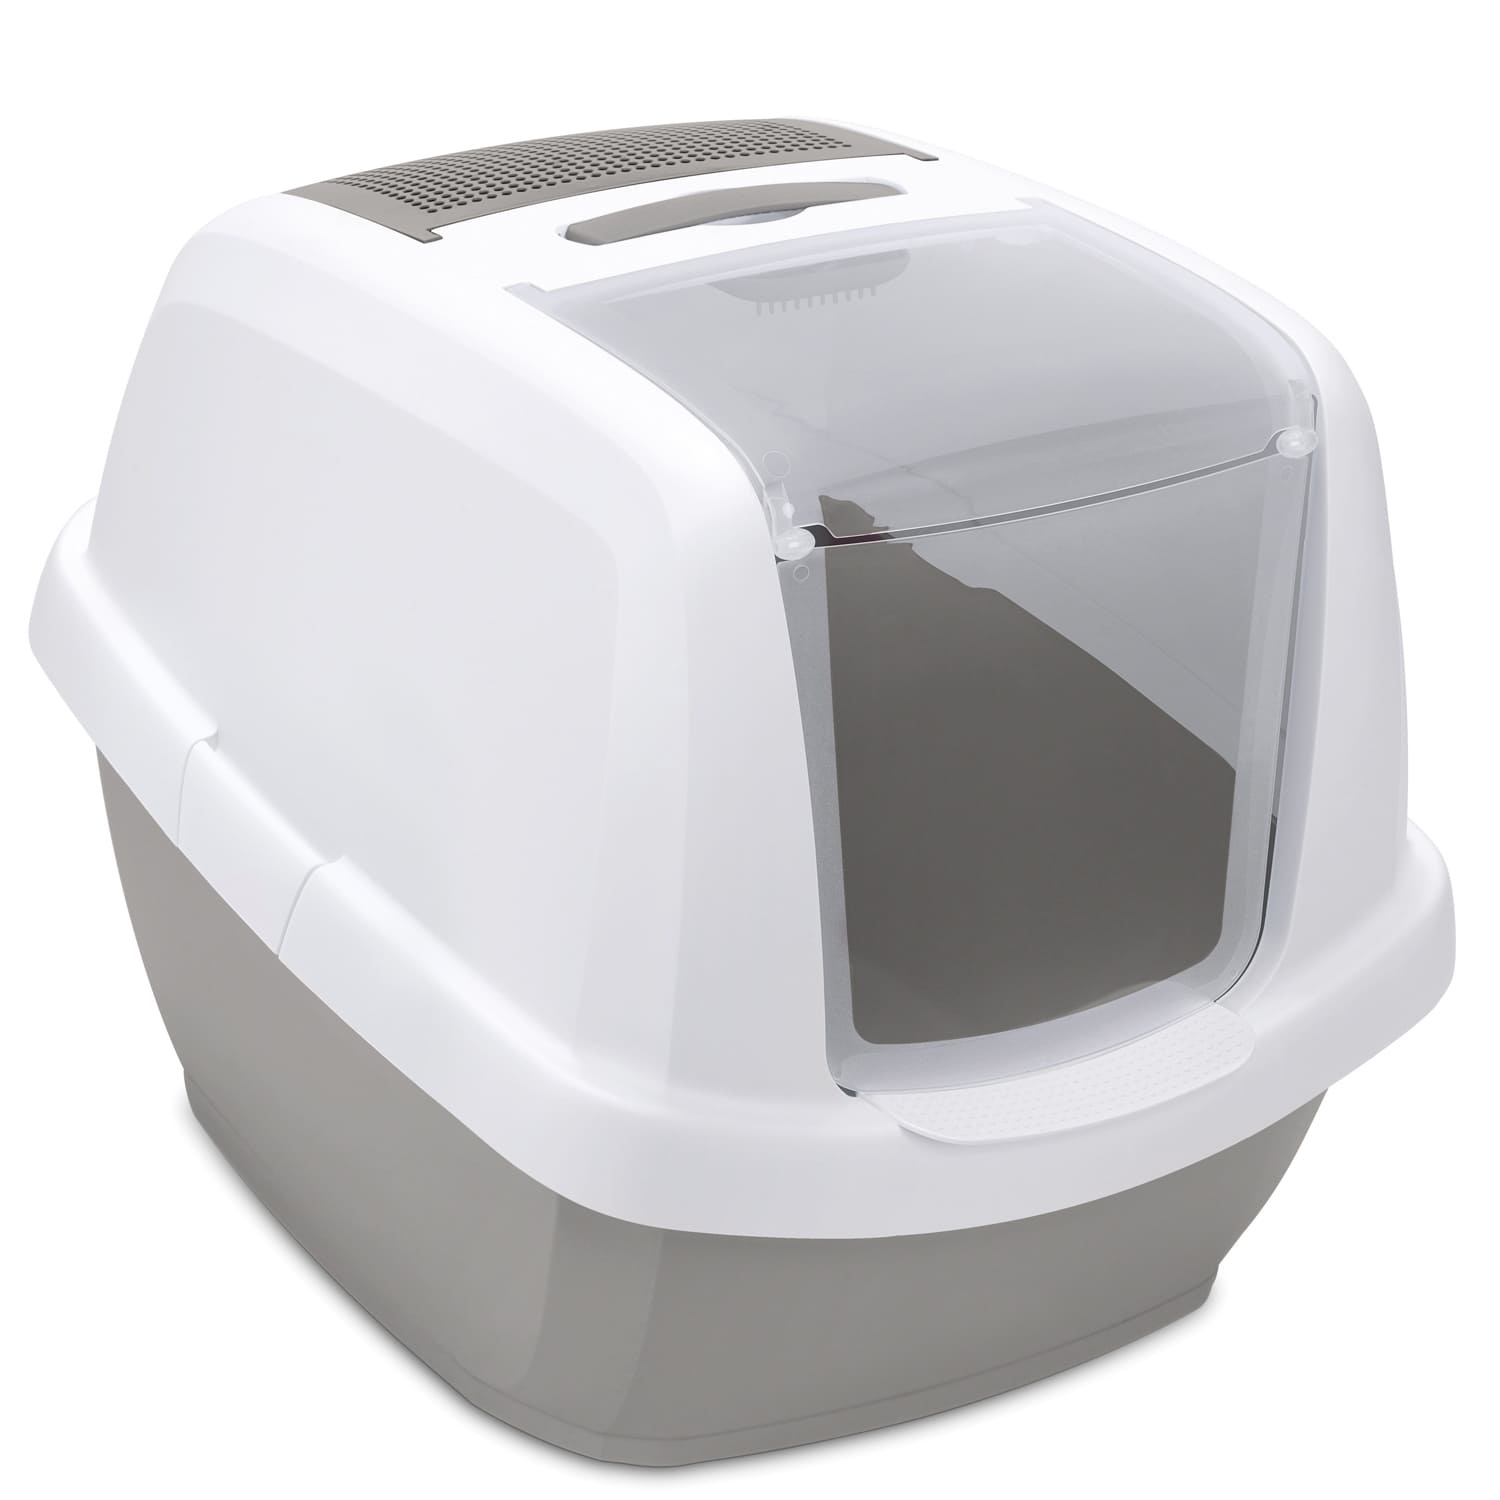 IMAC IMAC био-туалет для кошек , белый/бежевый (2,85 кг) био туалет